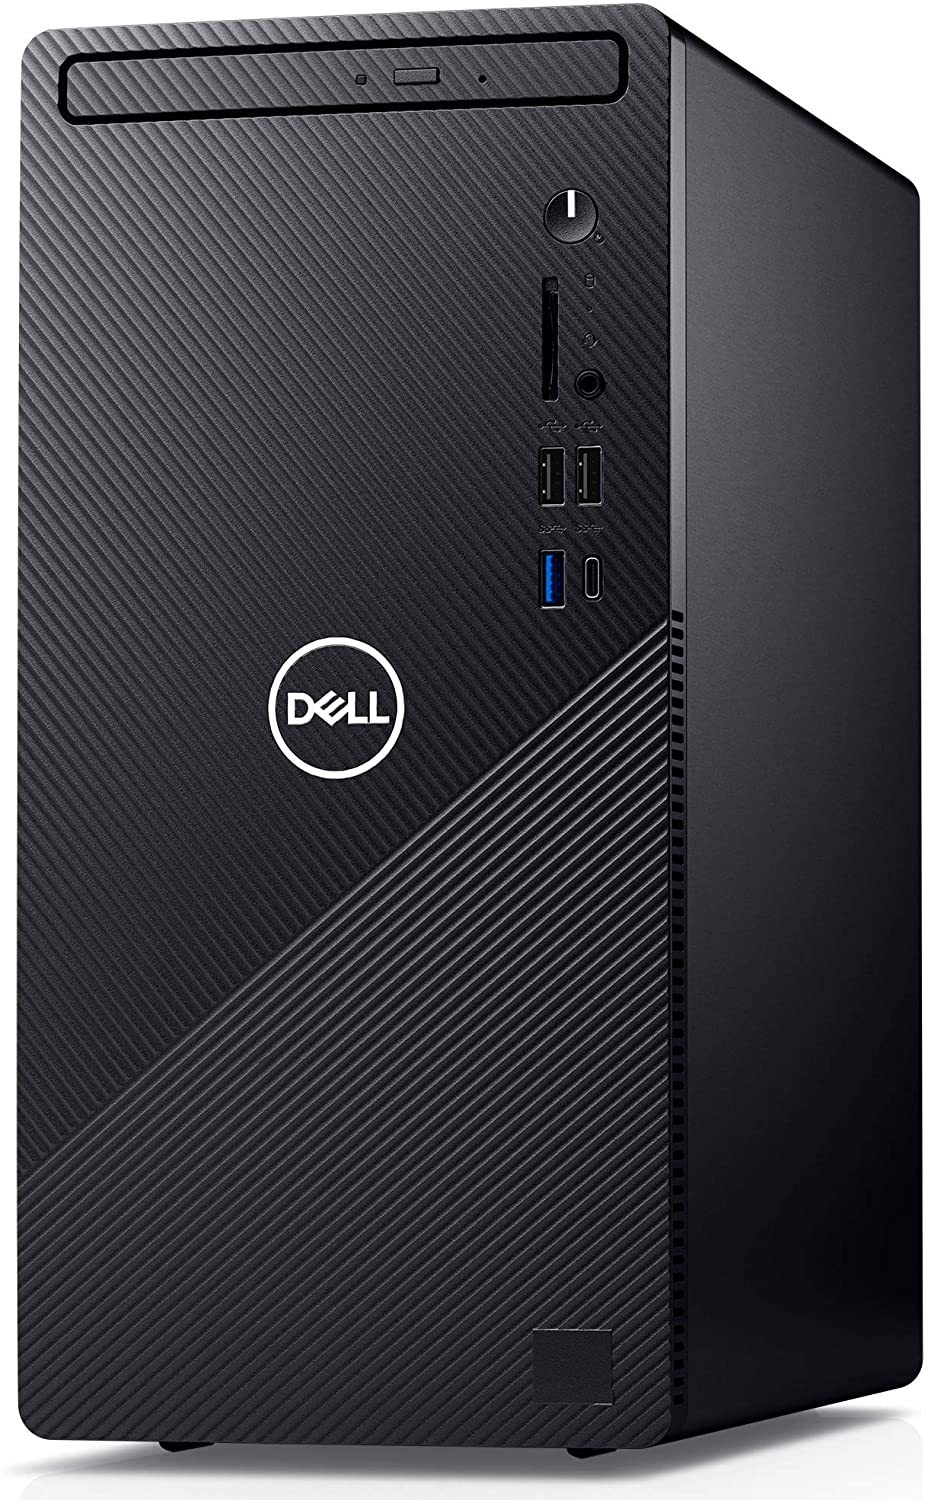 Sistem Brand Dell Inspiron 3881 Intel Core i5-10400 RAM 8GB HDD 1TB + SSD 256GB Linux